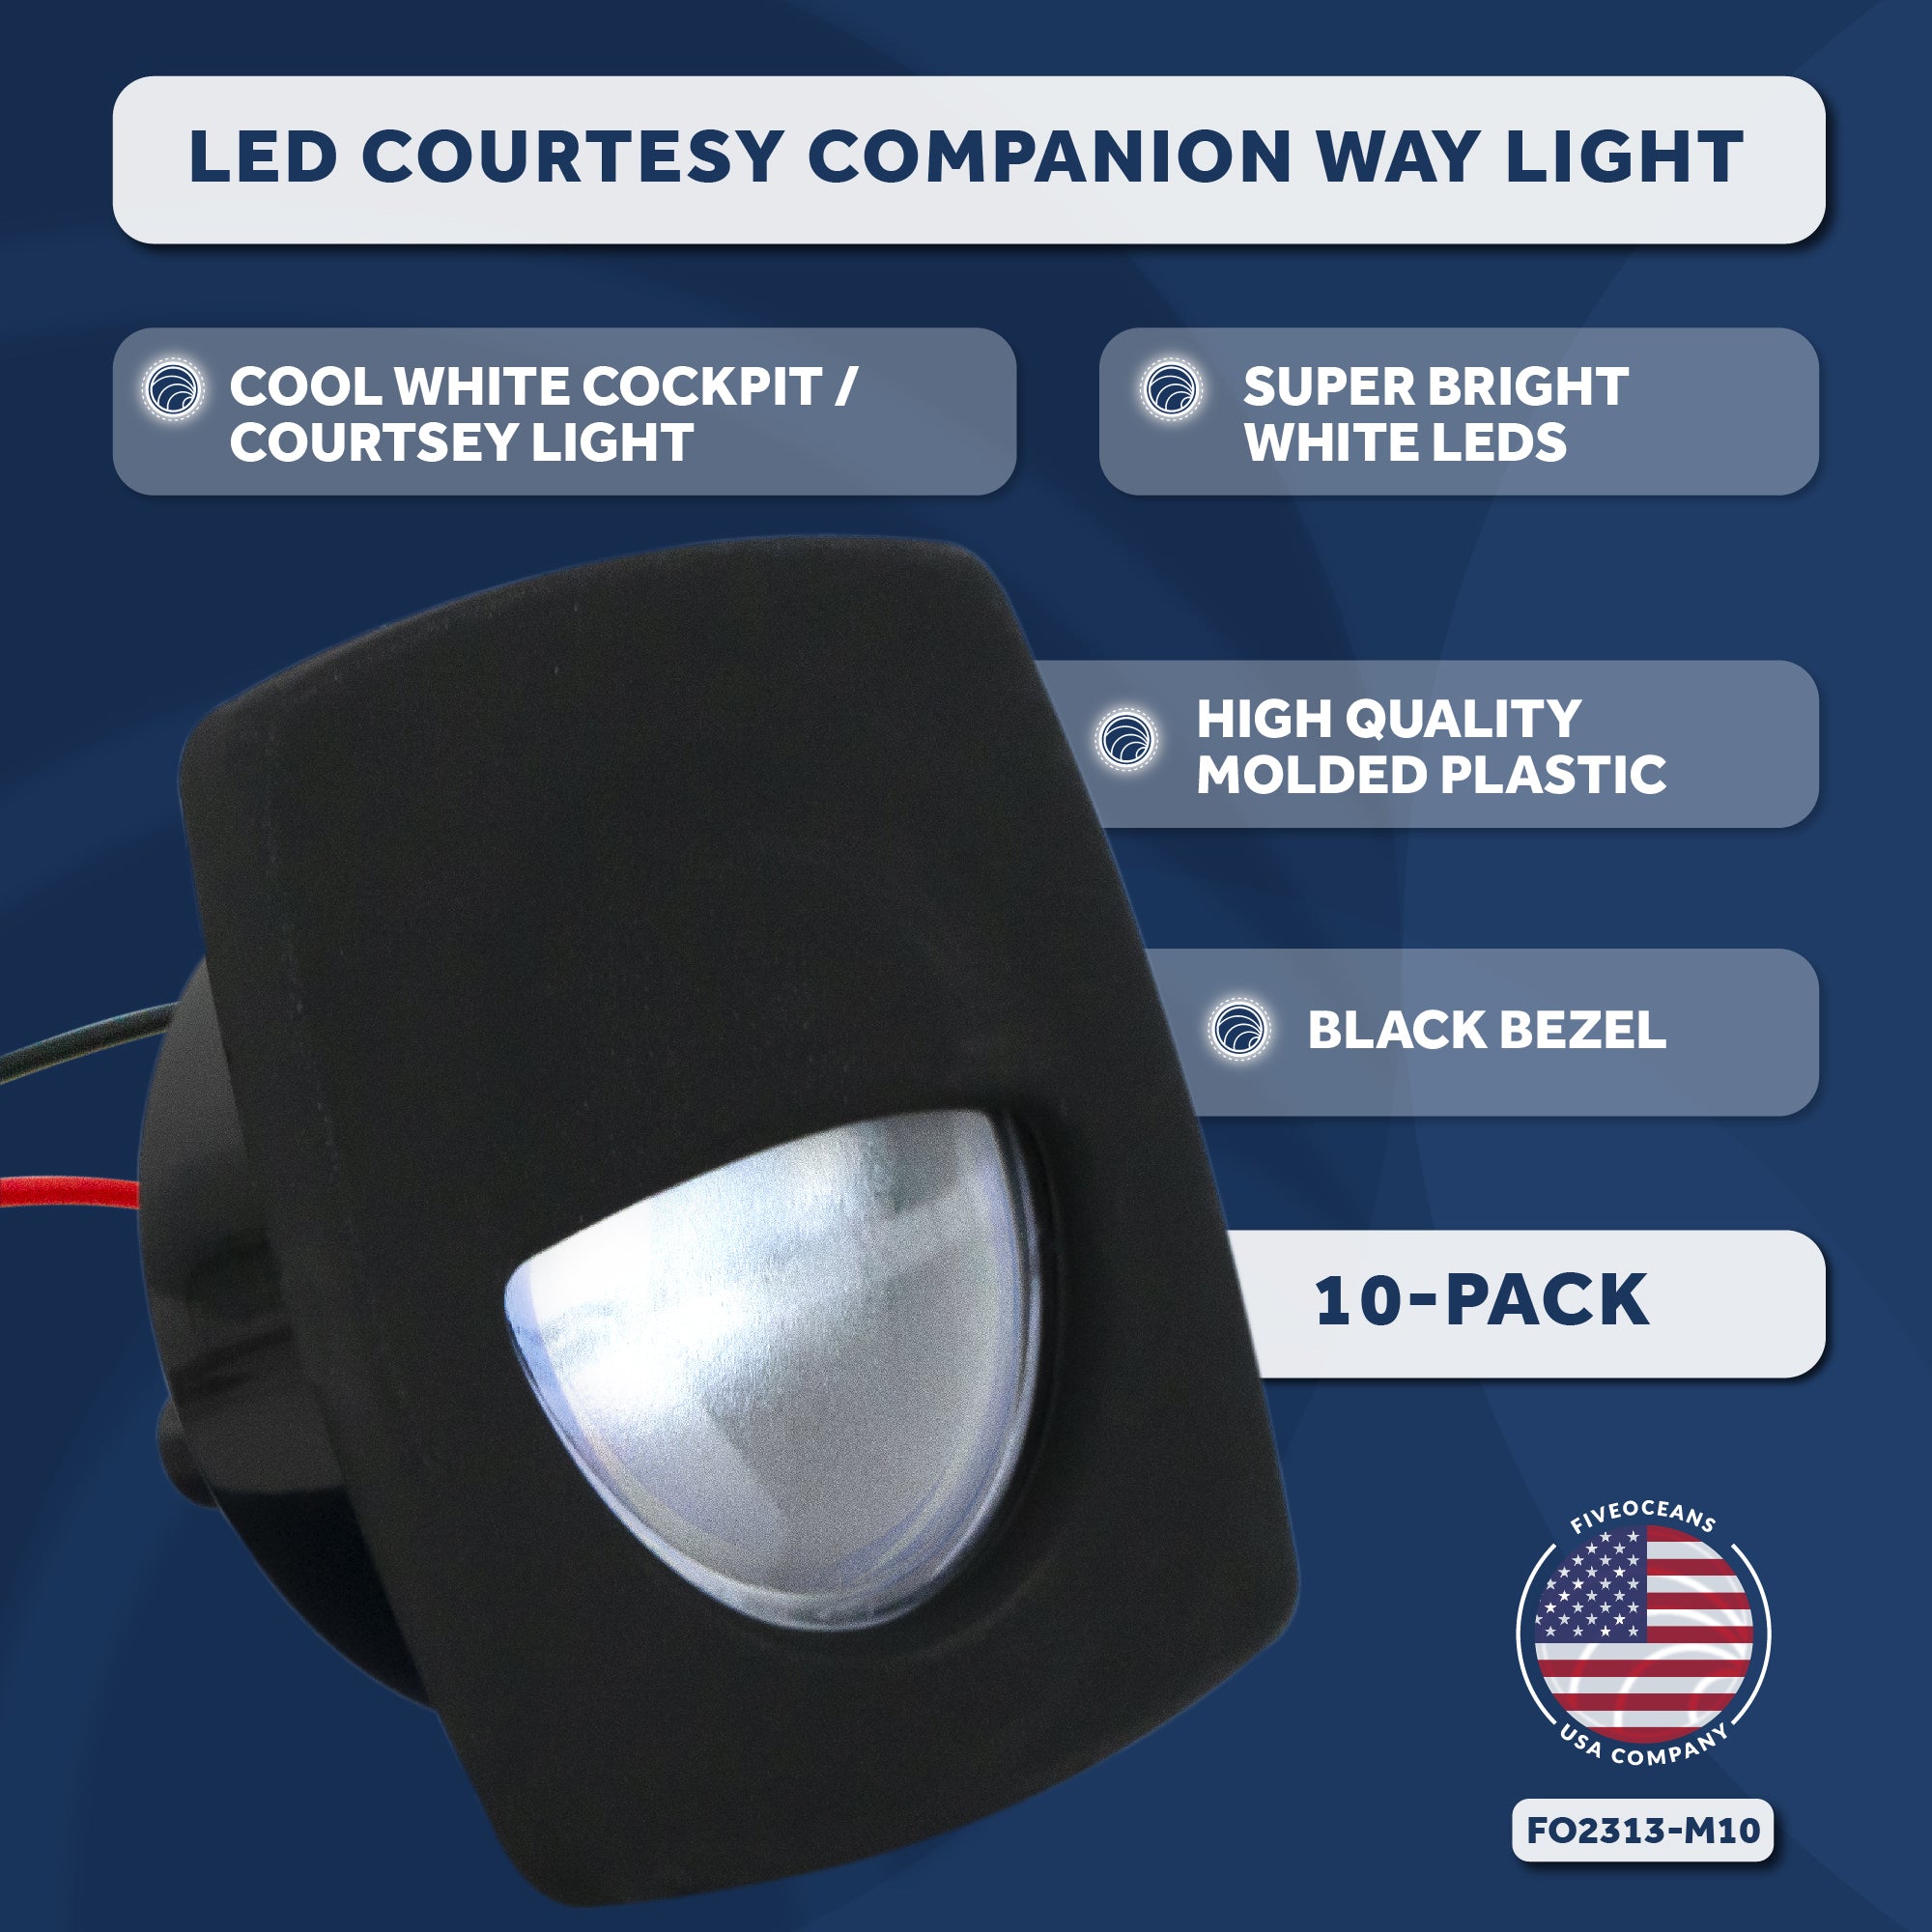 LED Courtesy Companion Way Light, Black Square, Cool White, 10-Pack - FO2313-M10